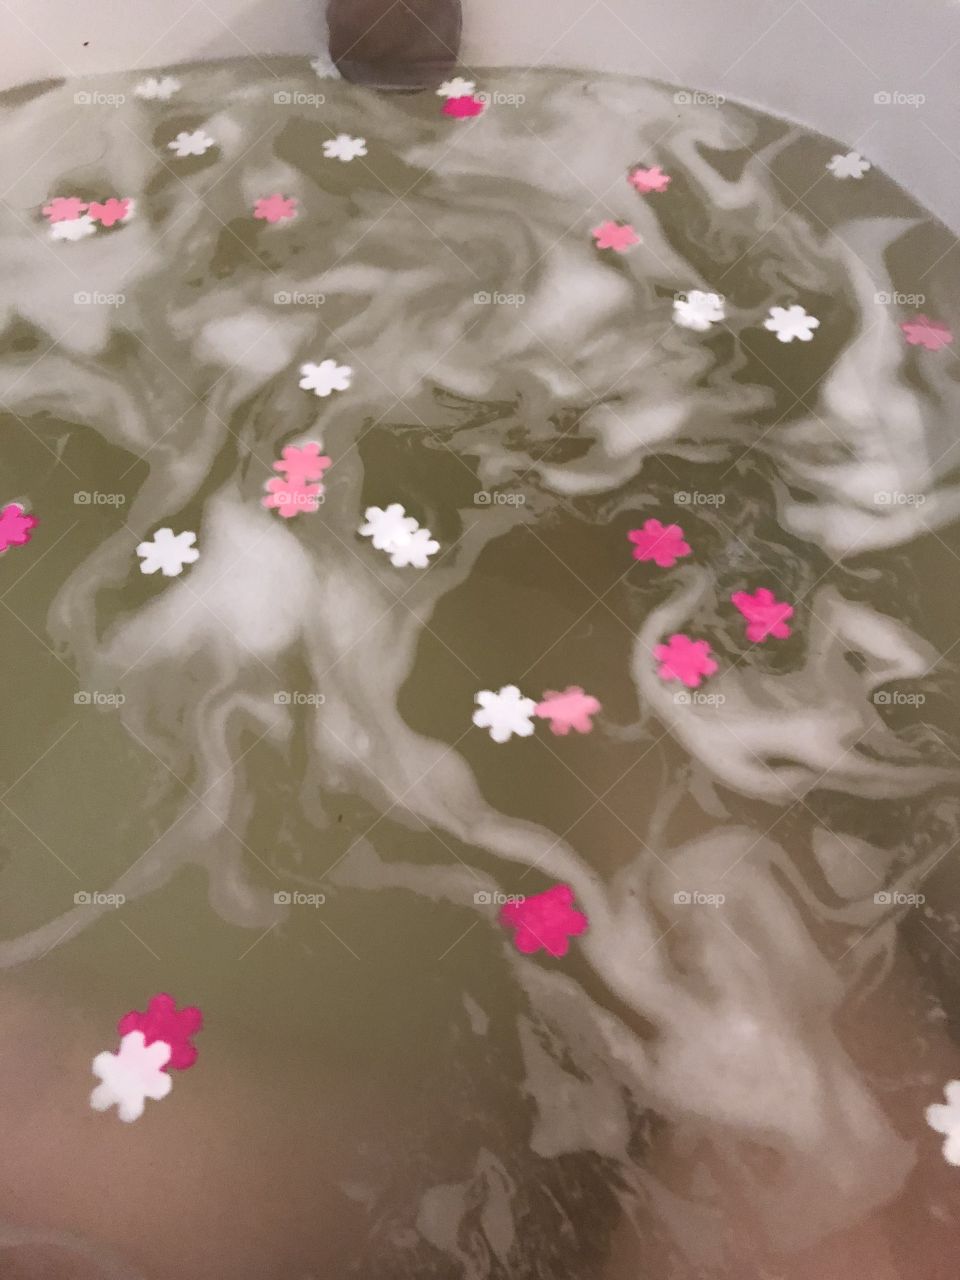 Confetti from my bath time 